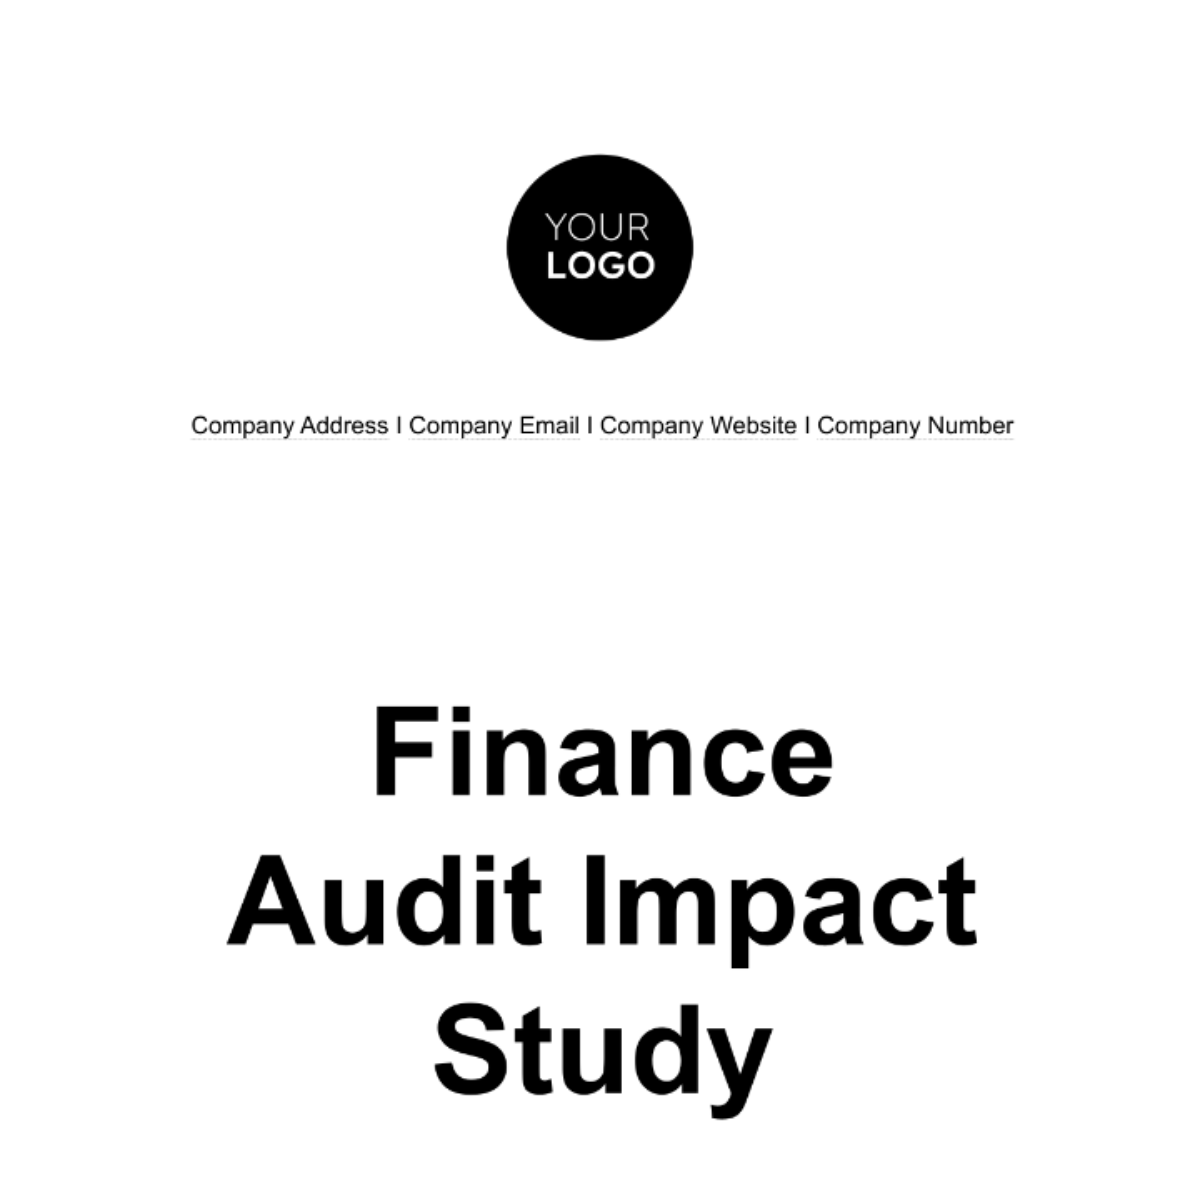 Finance Audit Impact Study Template